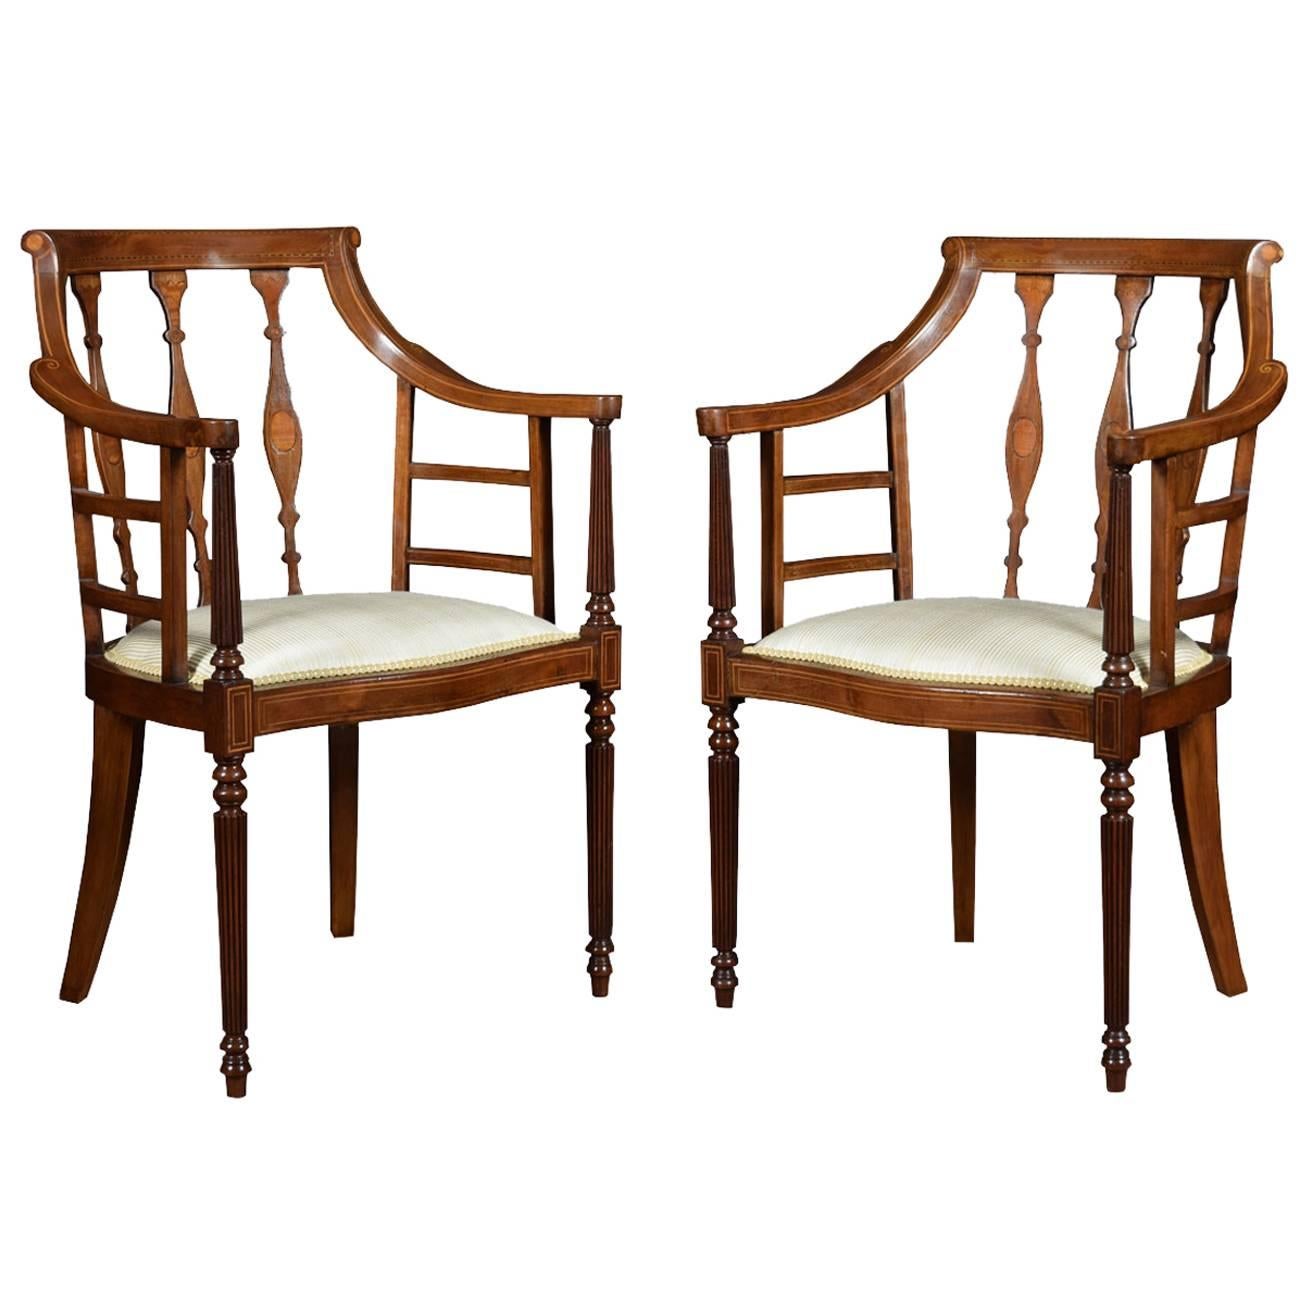 Pair of Edwardian Mahogany inlaid arm chairs 